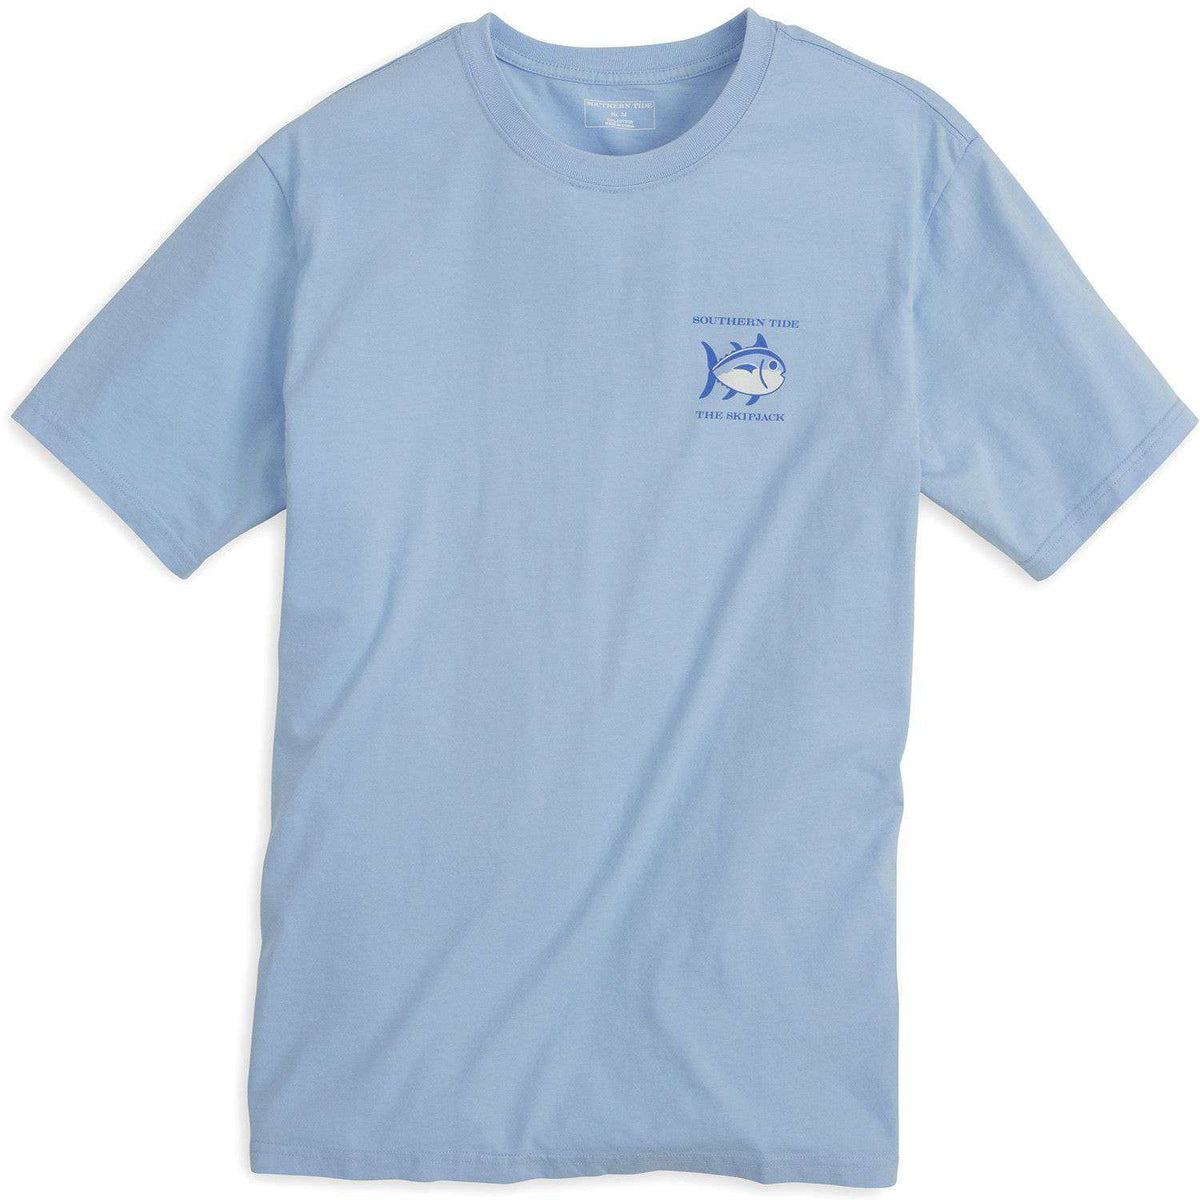 Original Skipjack Tee Shirt in True Blue by Southern Tide - Country Club Prep